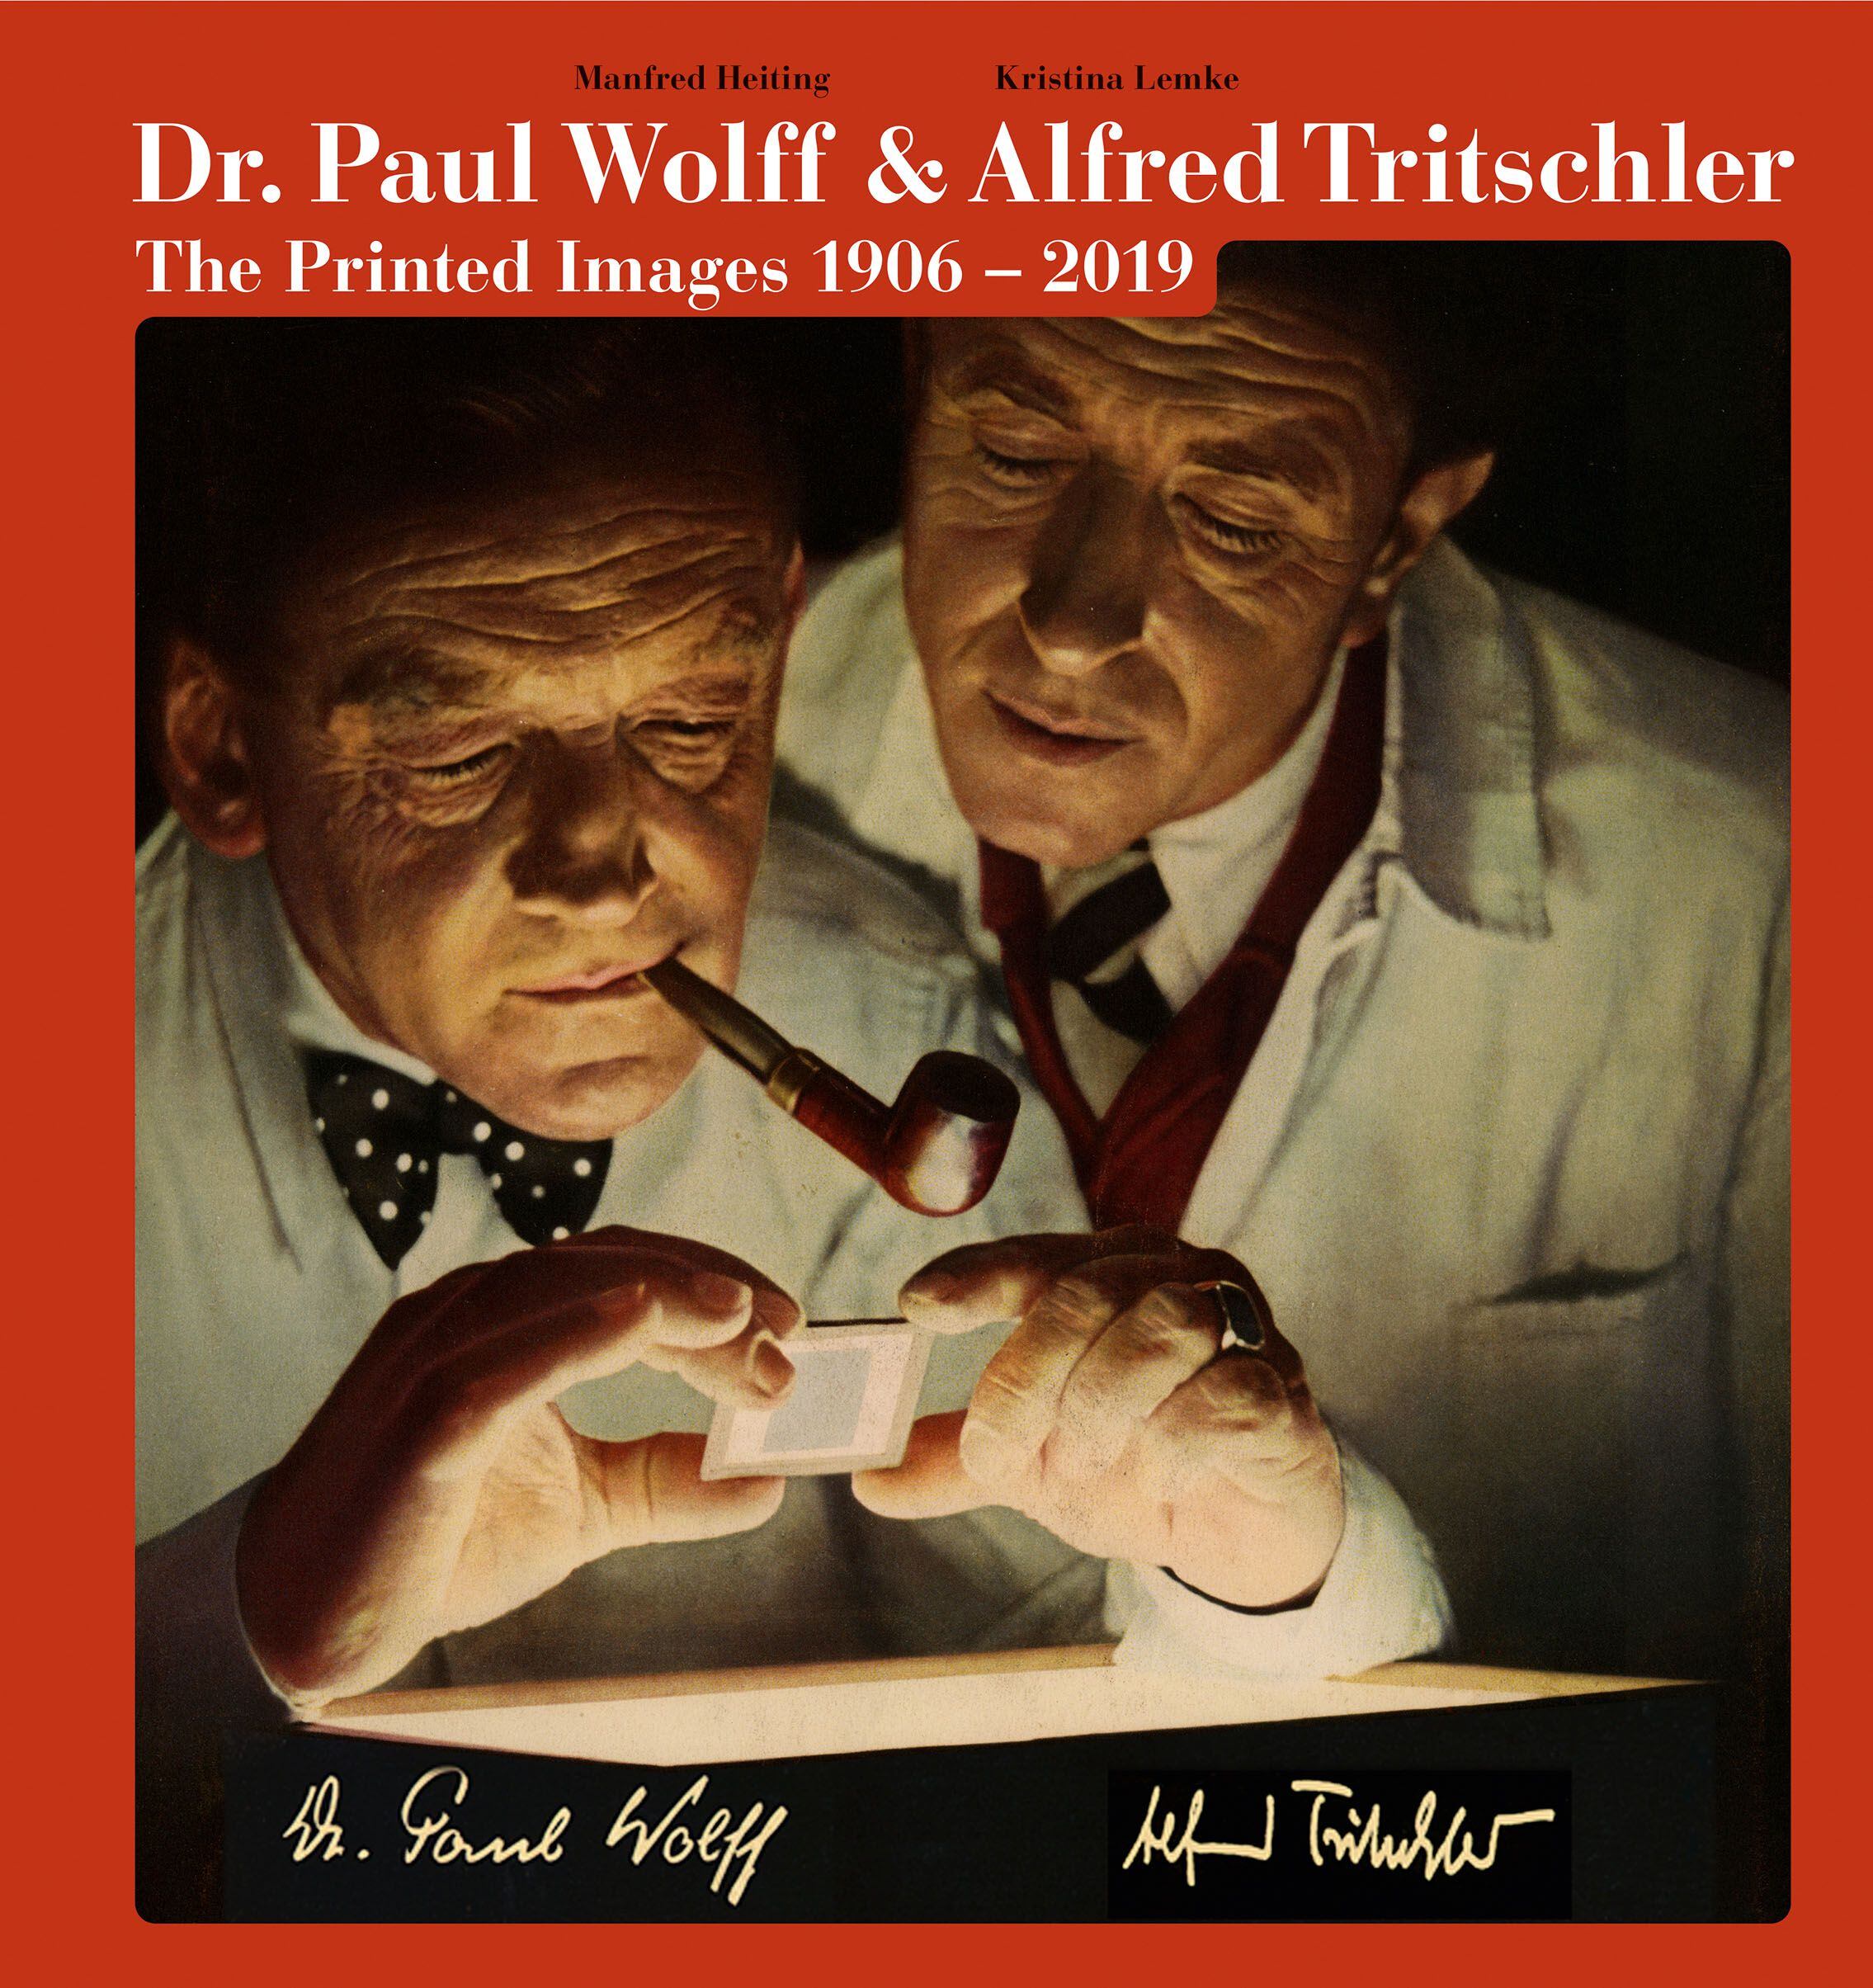 Portada de 'Dr. Paul Wolff & Alfred Tritschler. The Printed Images 1906-2019', publicado por Steidl